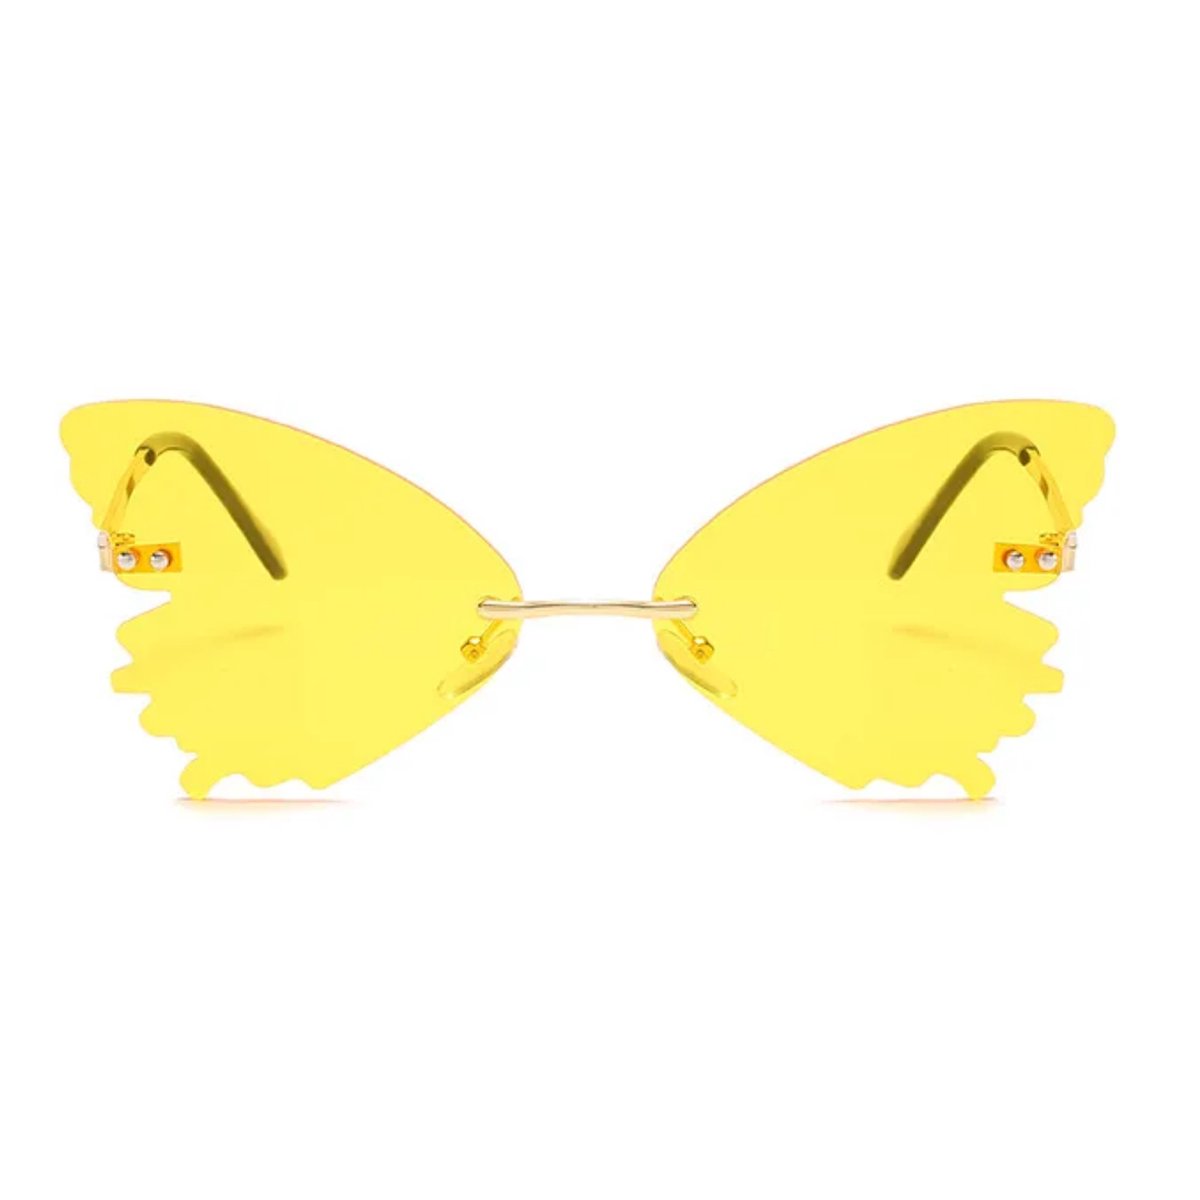 Vlinder zonnebril – 6 kleuren – Retro zonnebril / Festival bril / carnaval bril / accessoires / feest bril / gekke bril / verkleed bril